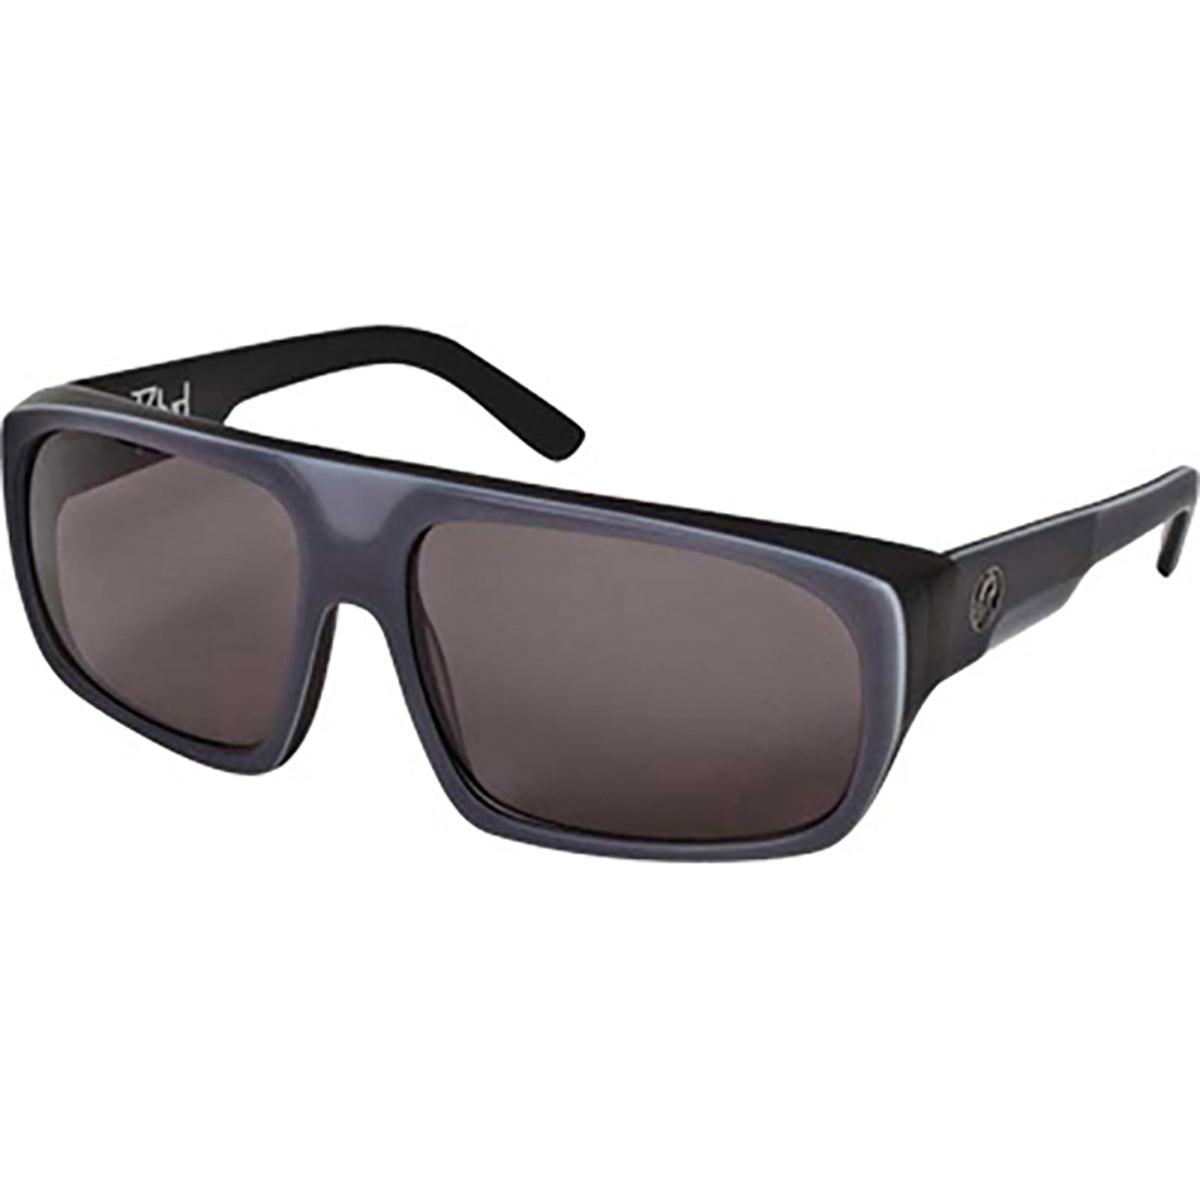 WK467 - Kids Wholesale Sunglasses ⋆ West Coast Sunglasses Inc.